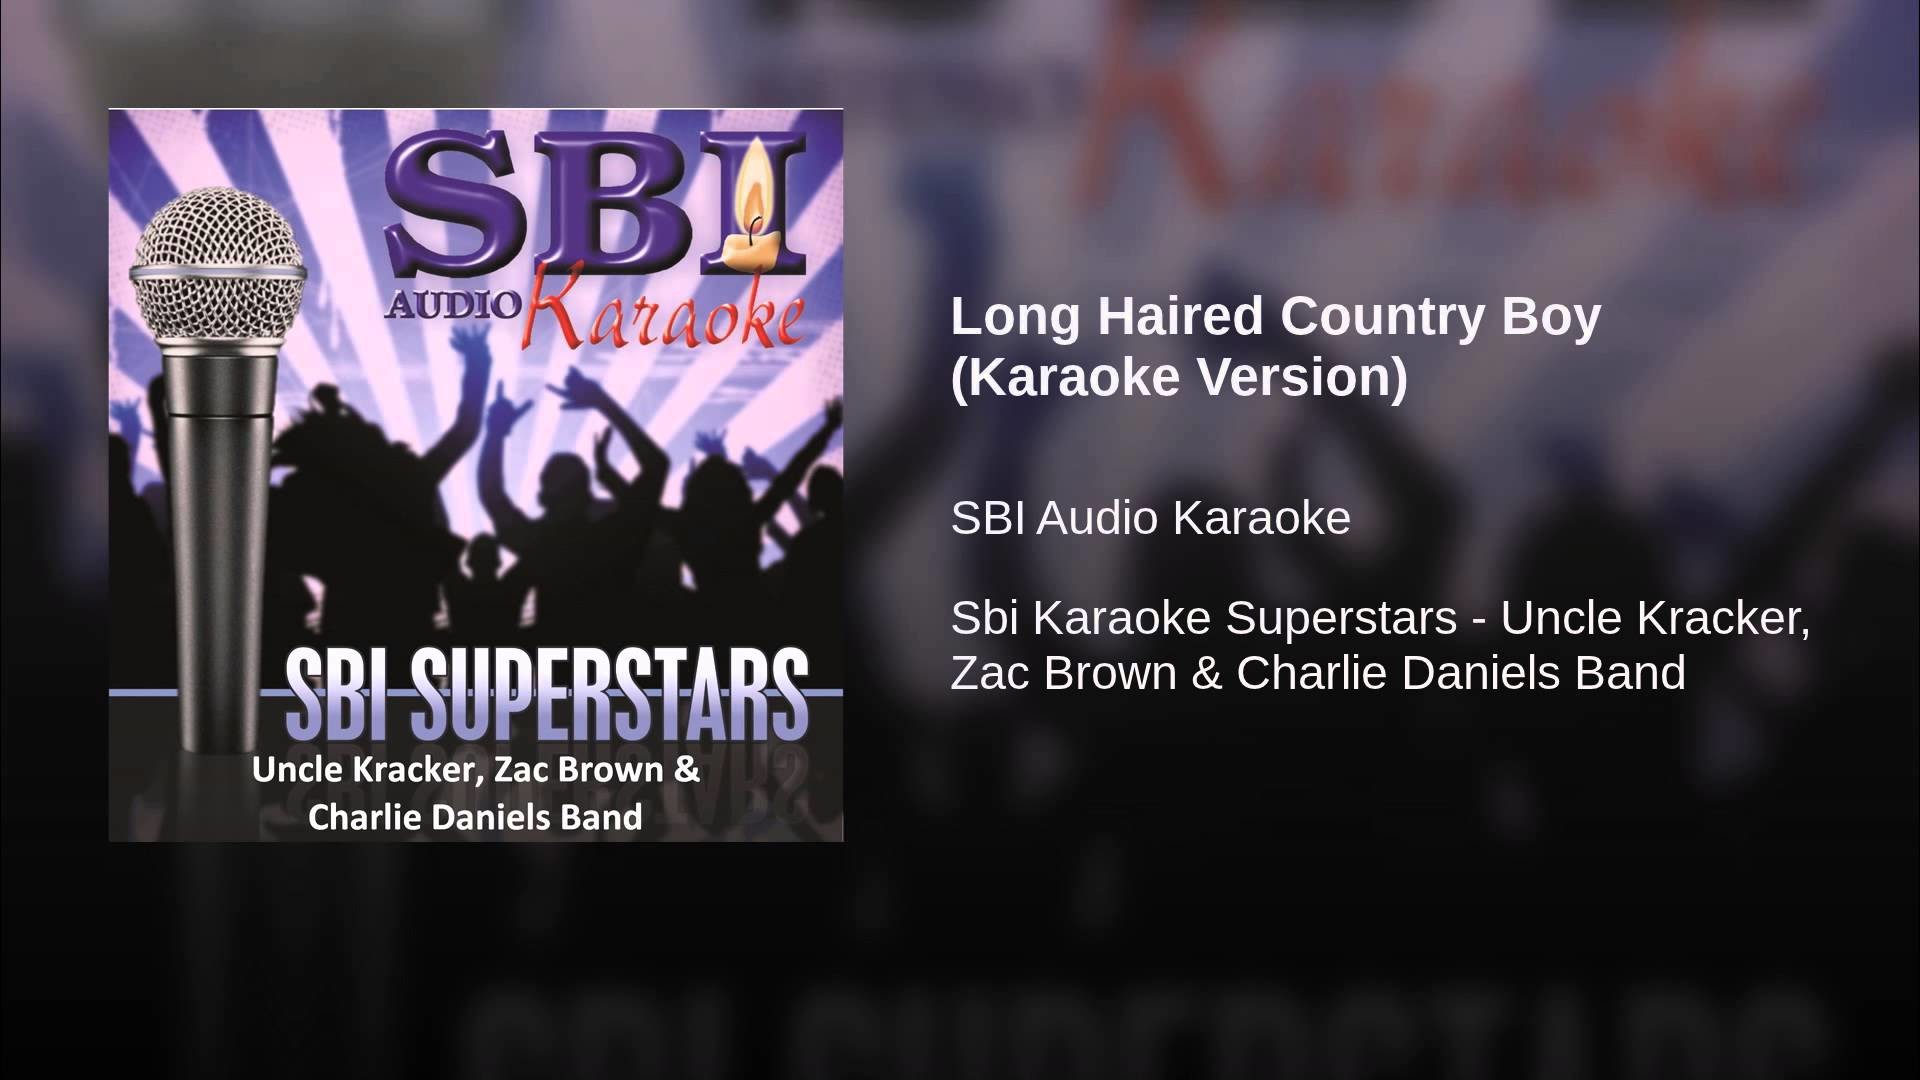 1920x1080 Long Haired Country Boy (Karaoke Version)